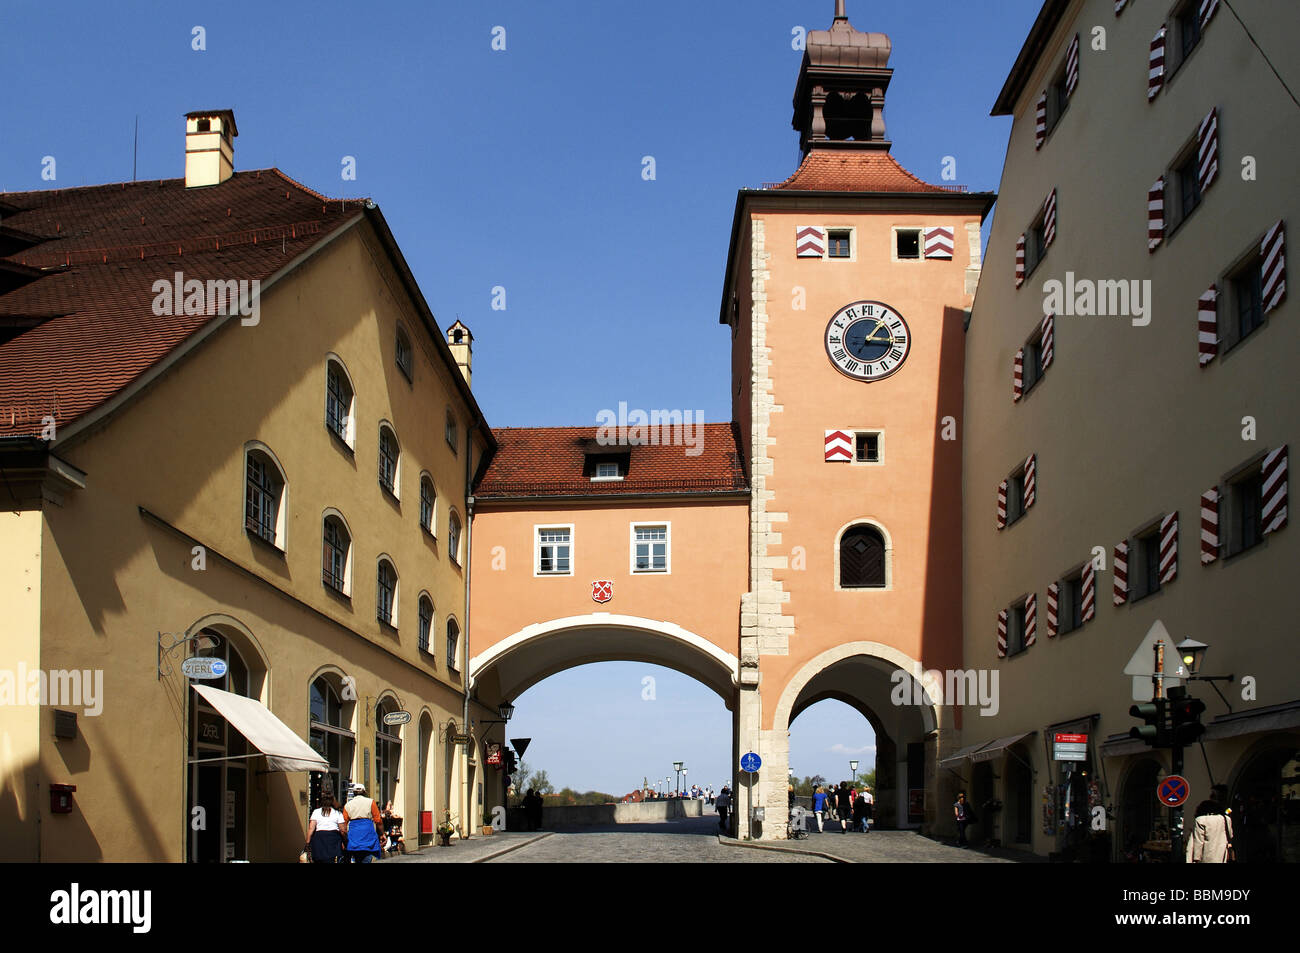 Bruecktor Gate at the Steinerne Bruecke Bridge, Regensburg, Lower Bavaria, Germany, Europe Stock Photo